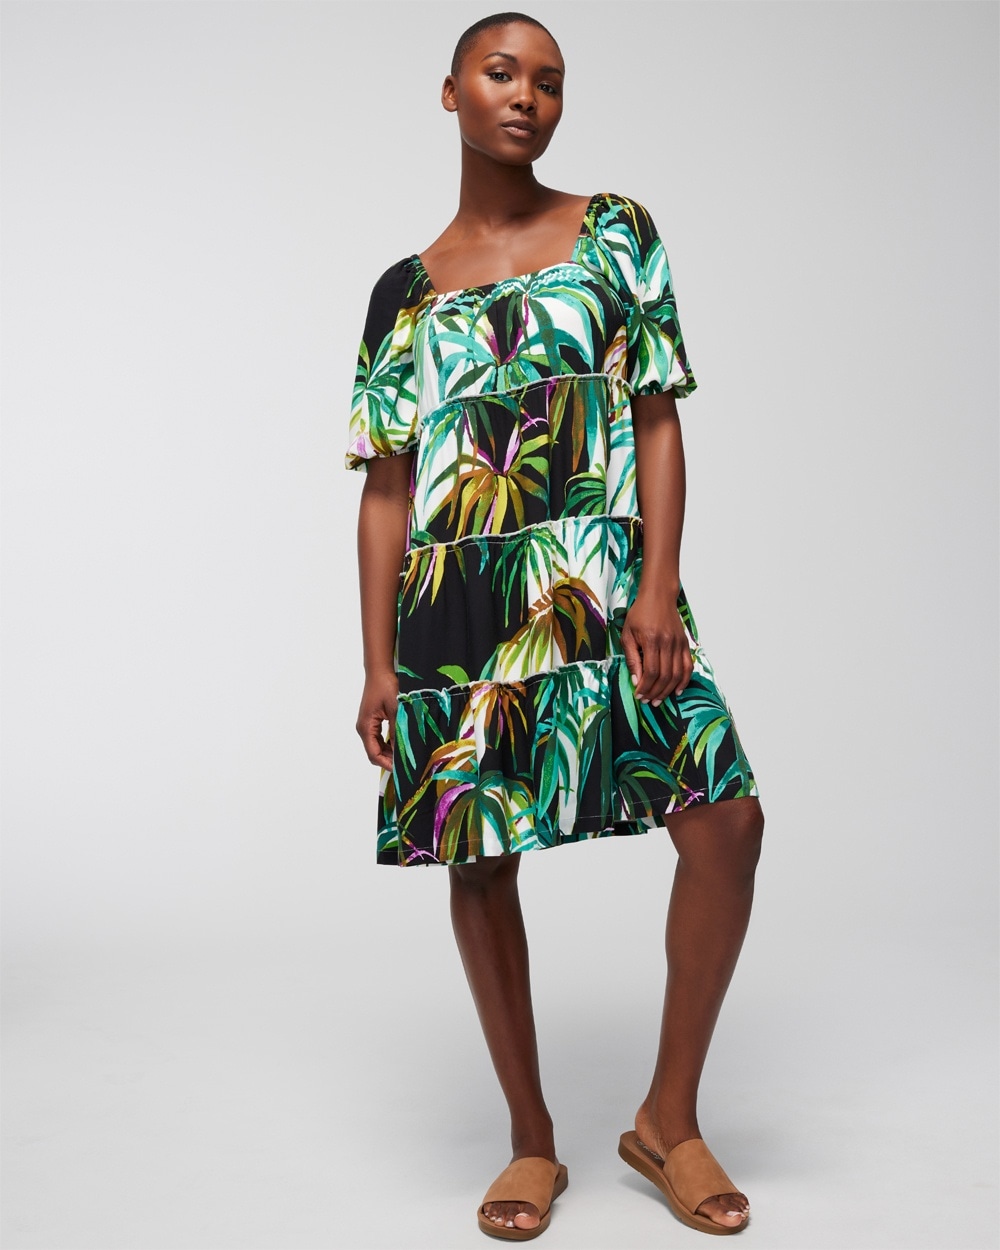 Circle Skirt Dress With Built-In Bra - Soma